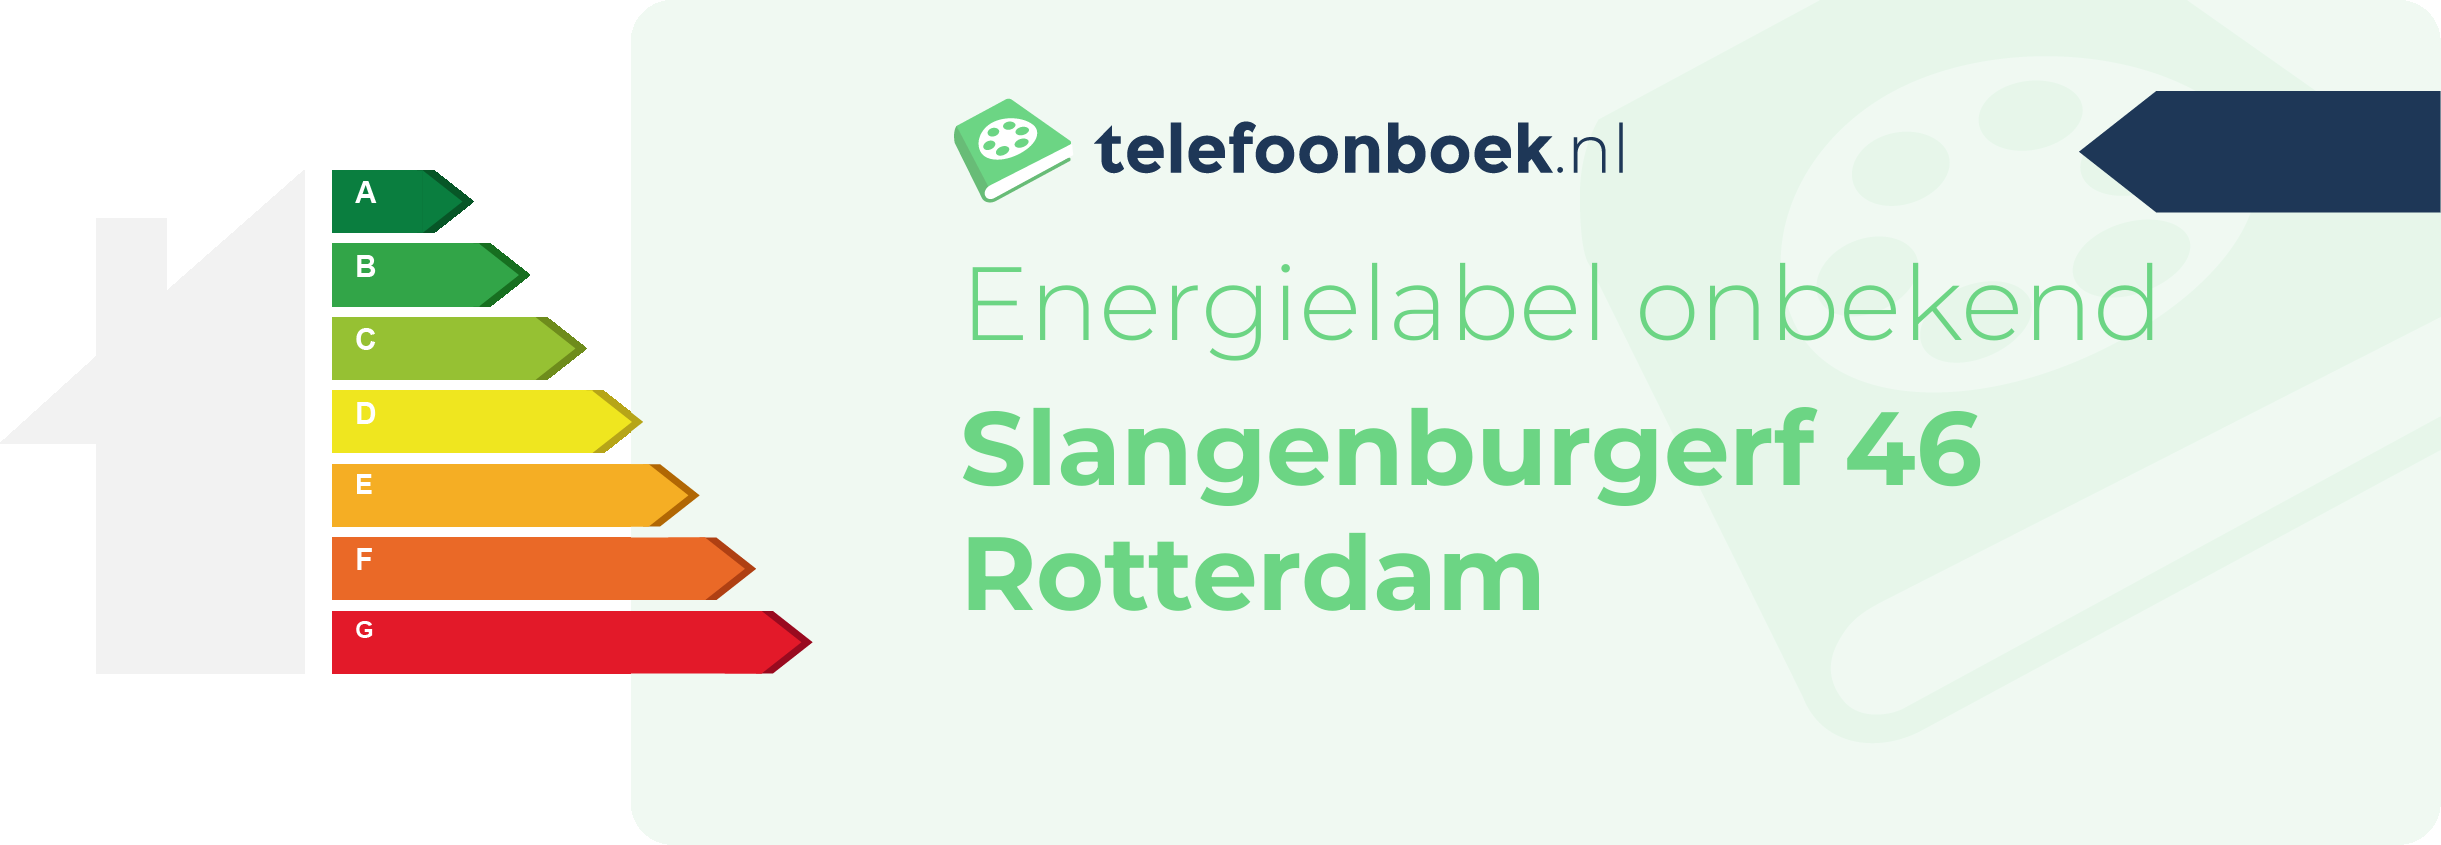 Energielabel Slangenburgerf 46 Rotterdam